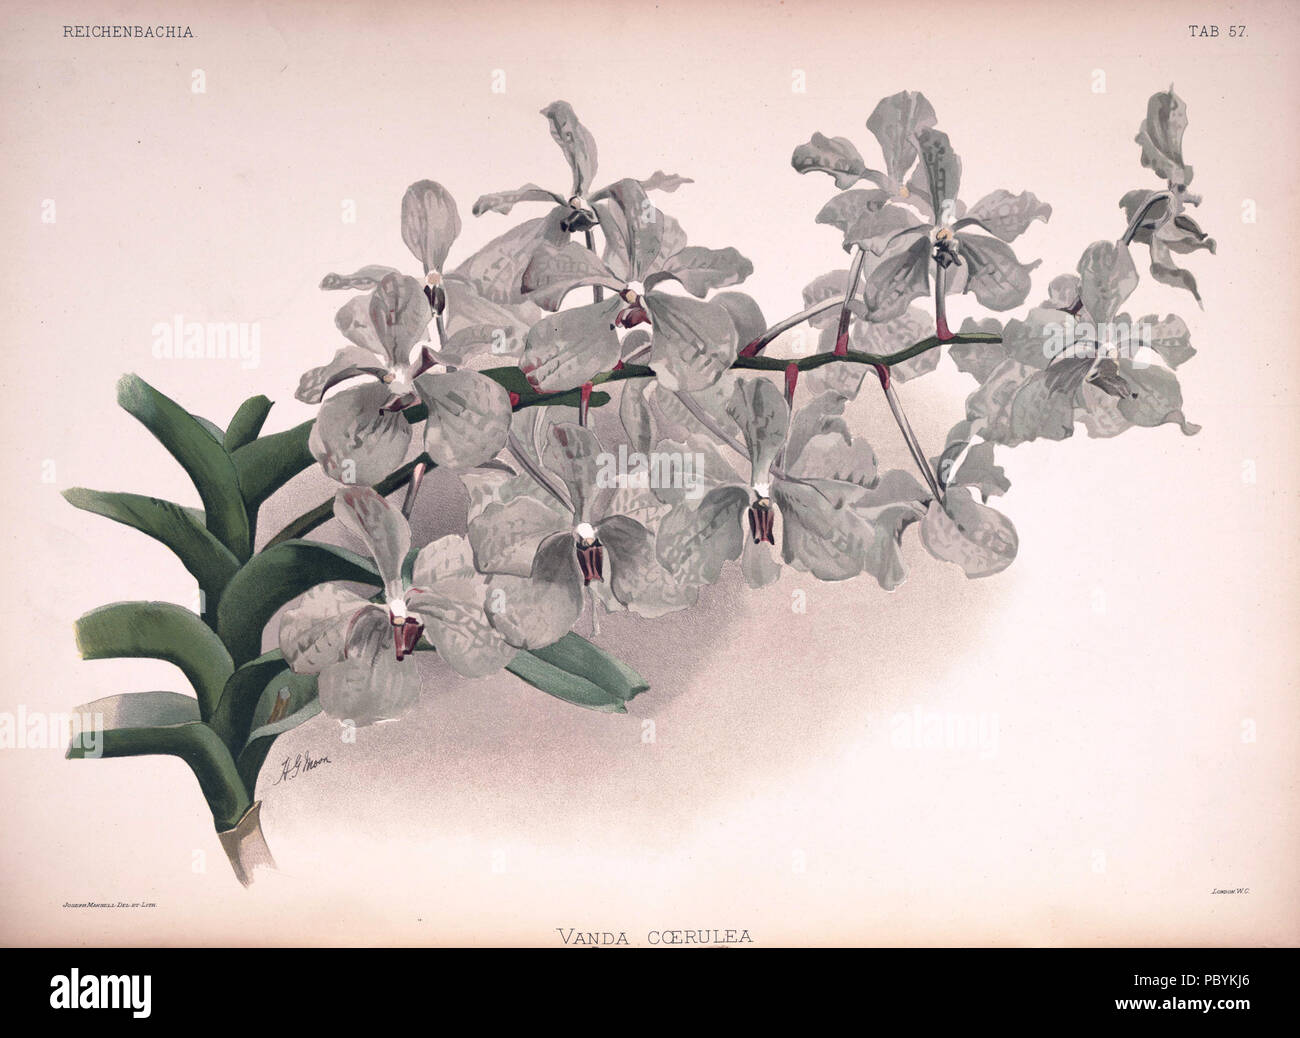 220 Frederick Sander - Reichenbachia II plate 57 (1890) - Vanda coerulea Stock Photo